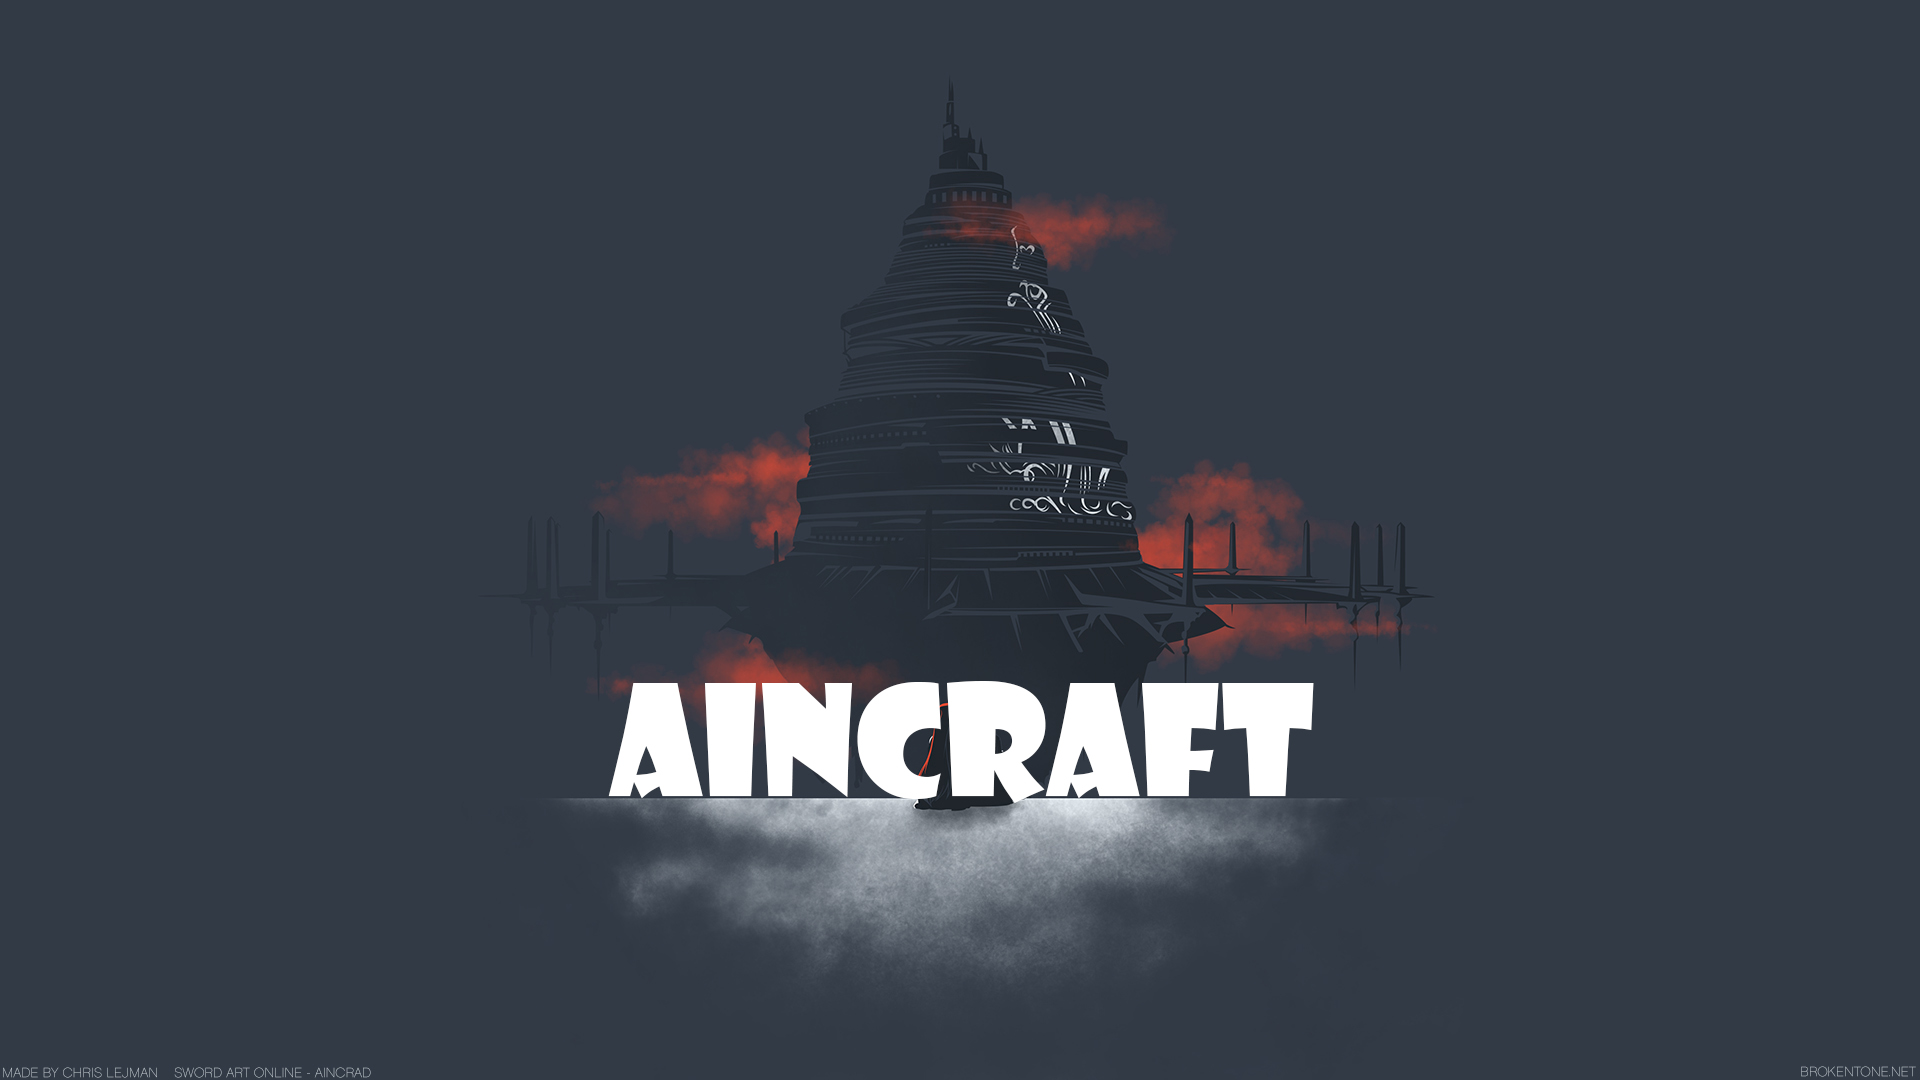 SwordCraftOnline - Coming Soon 1.18.2 - Minecraft Mods - CurseForge